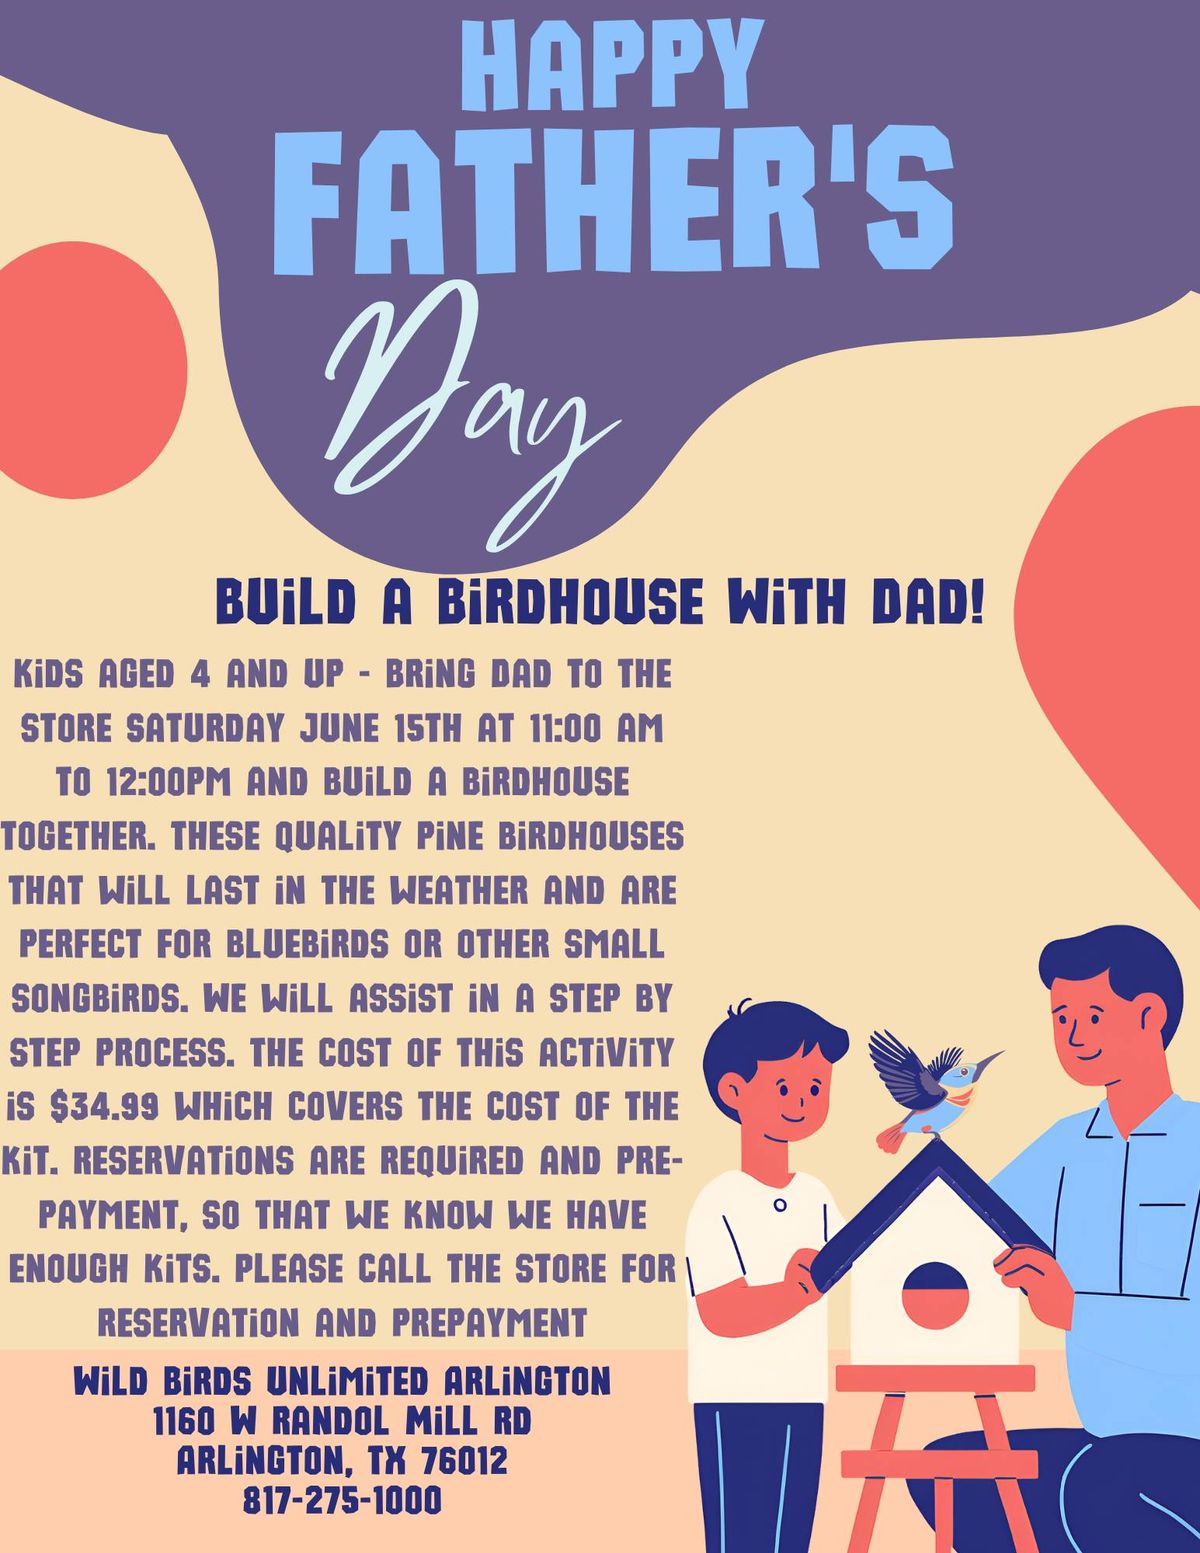 Build a birdhouse with Dad!